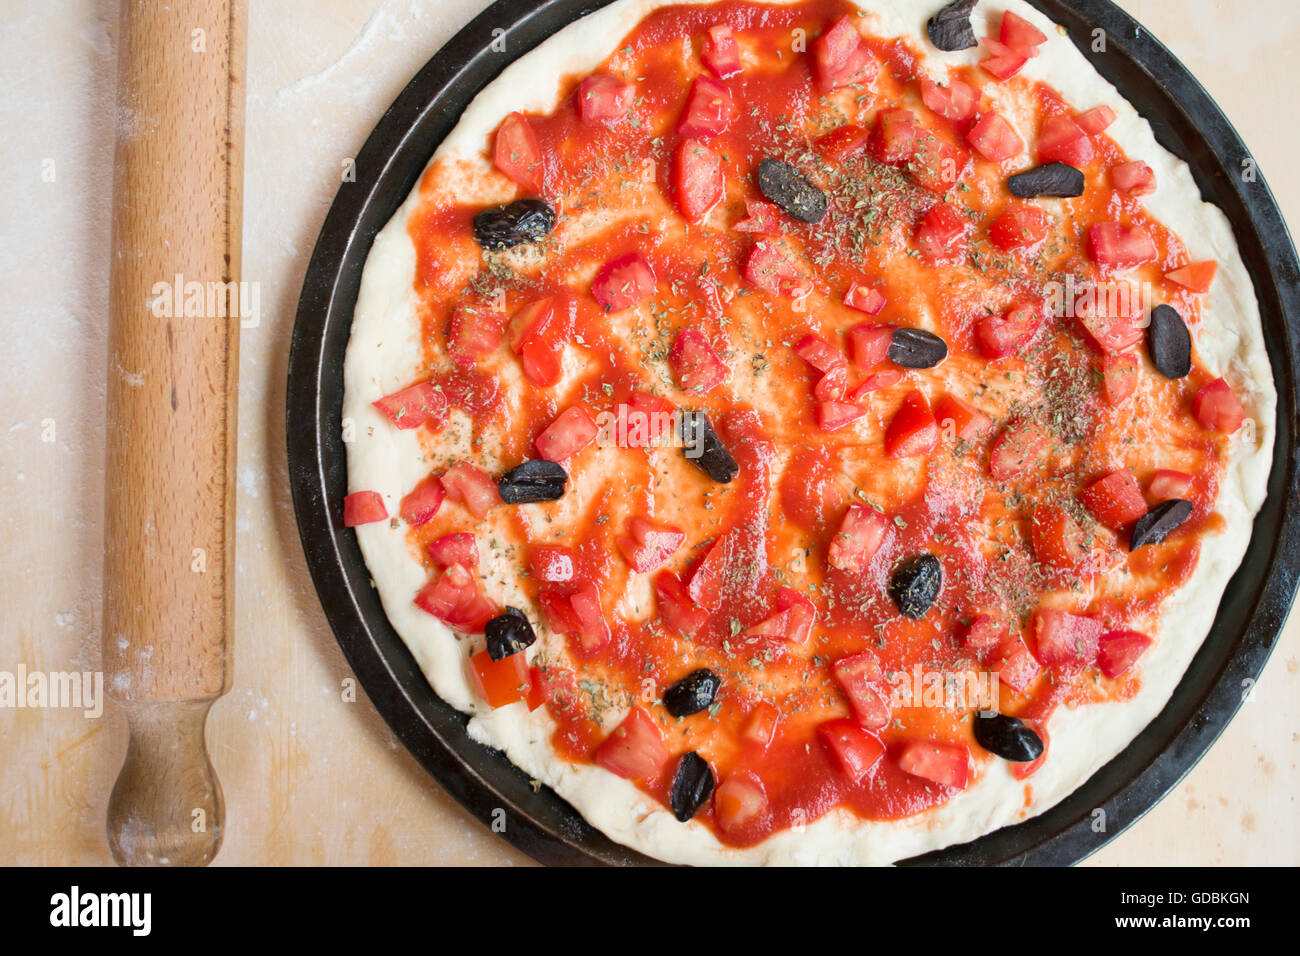 Sentar planas de pizza con tomate fresco y aceitunas negras con cerca de un rodillo Foto de stock